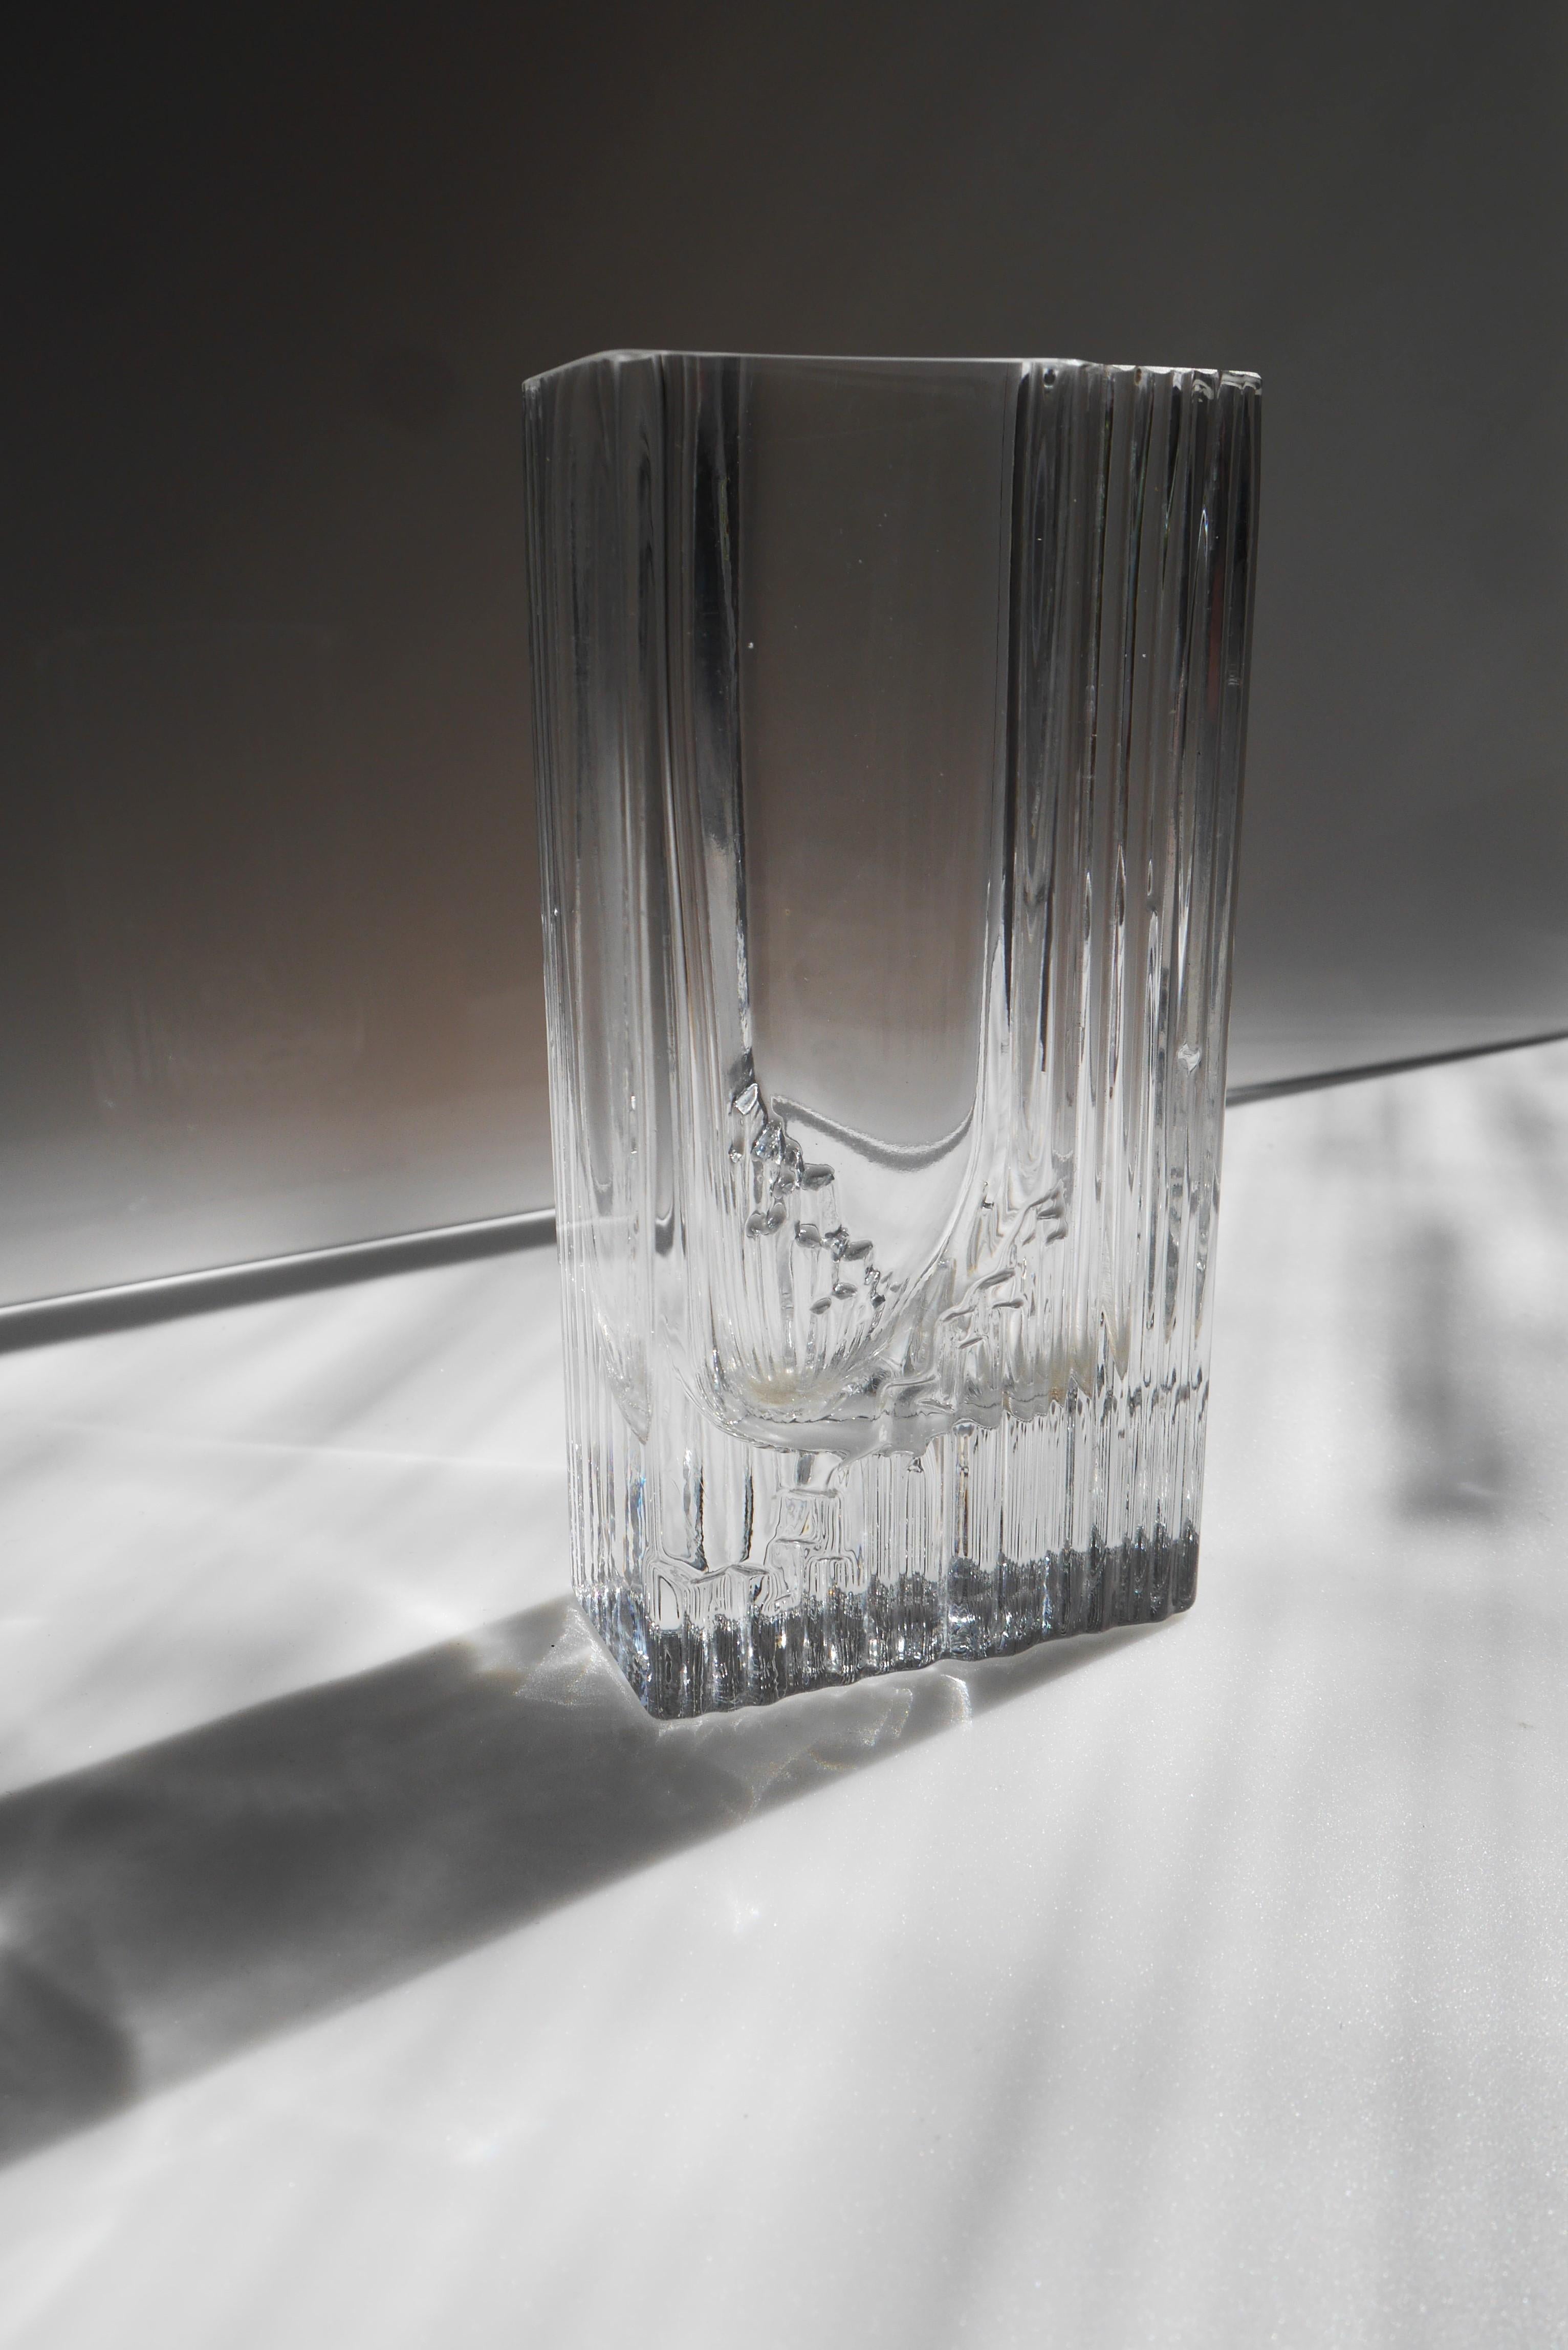 Finnish Iittala Vase, Known as “Sointu”, Made and Signed by Tapio Wirkkala